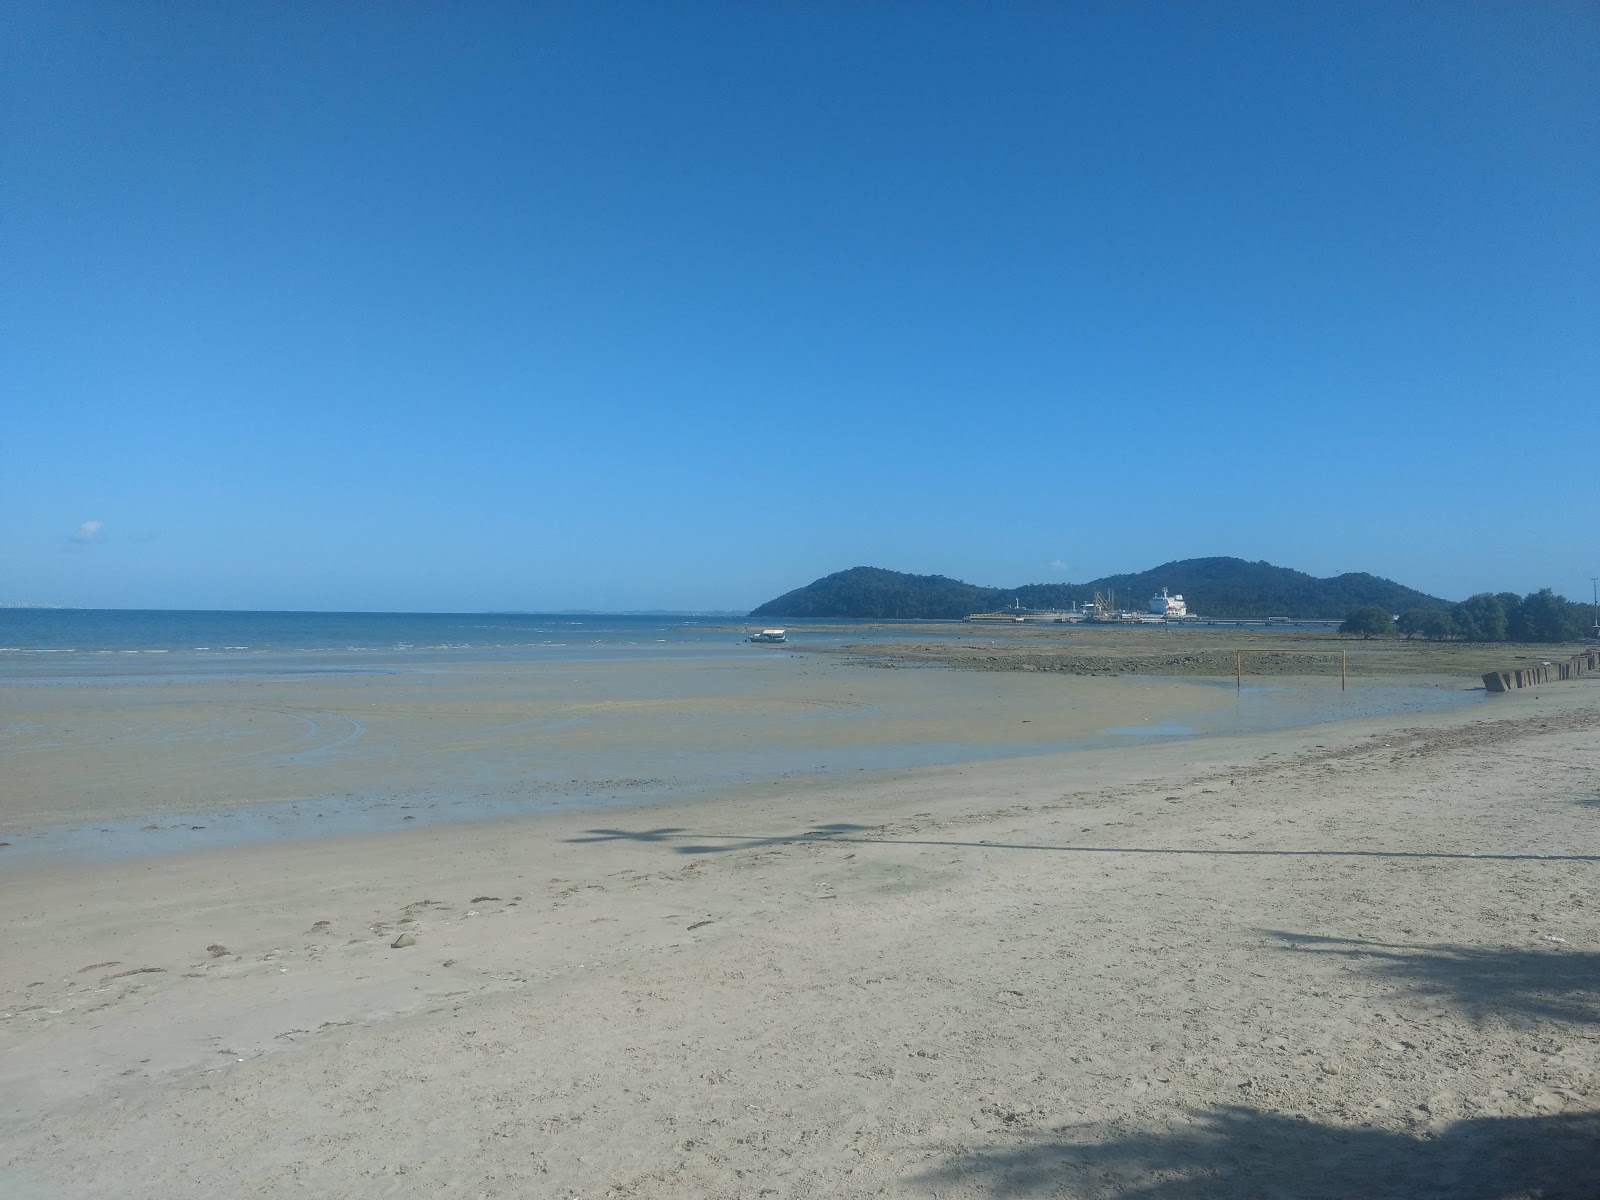 Zdjęcie Praia de Madre de Deus obszar udogodnień